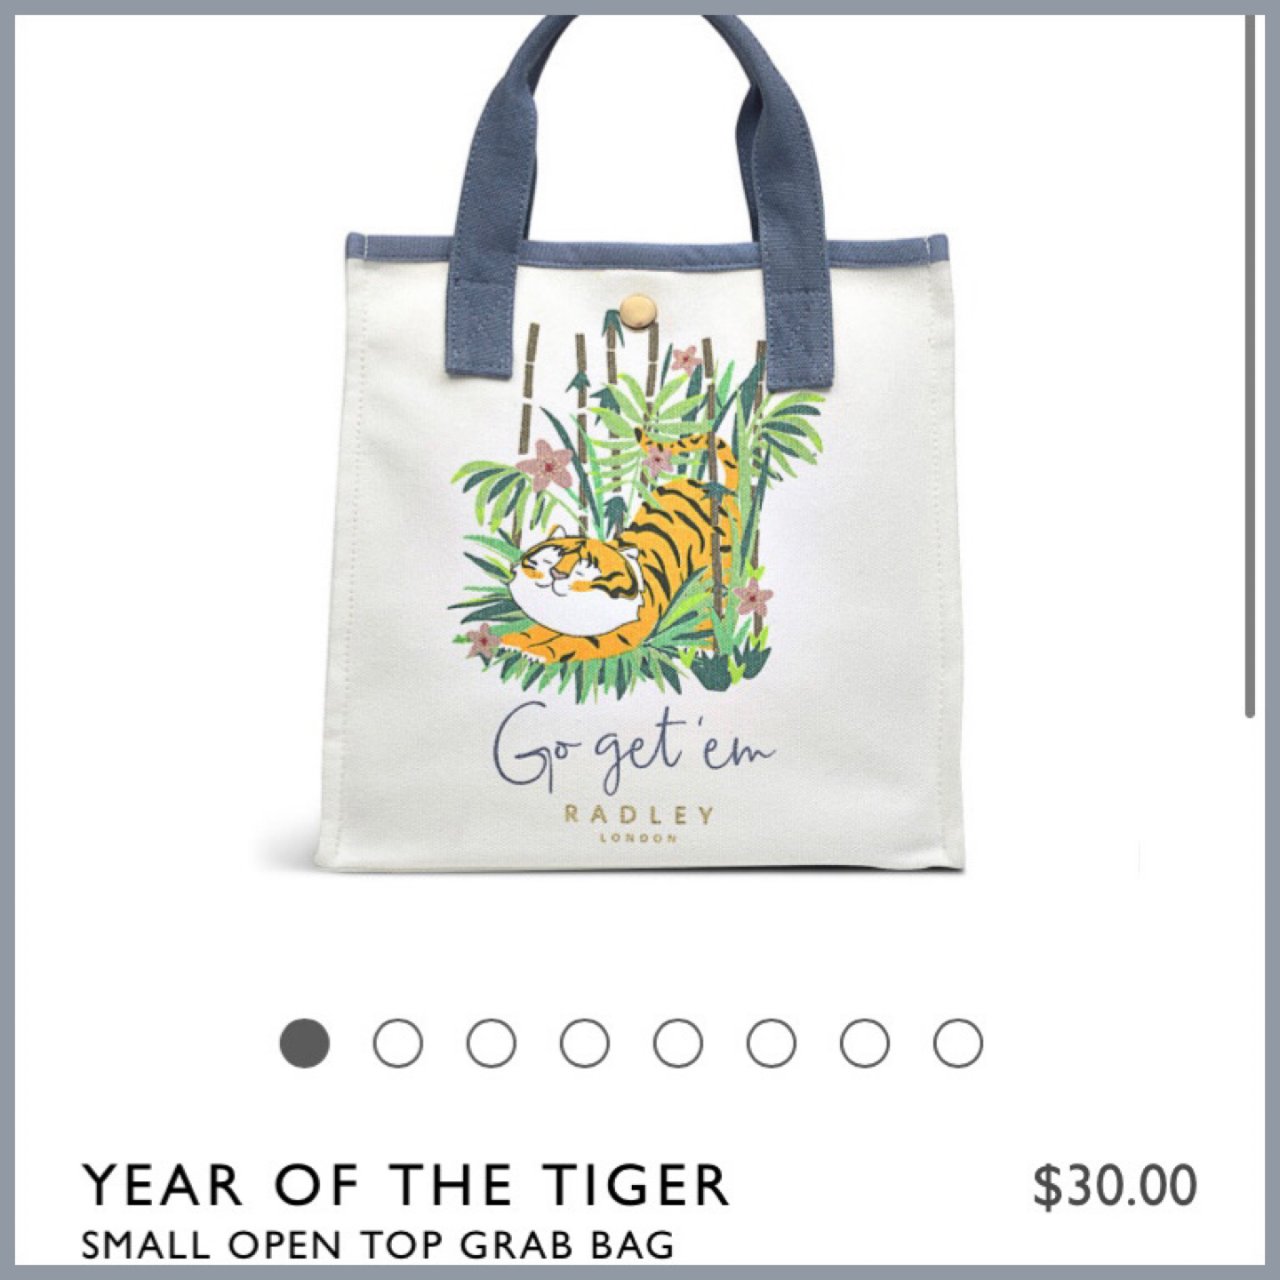 Small Grab Bag | Year of the Tiger | Radley London